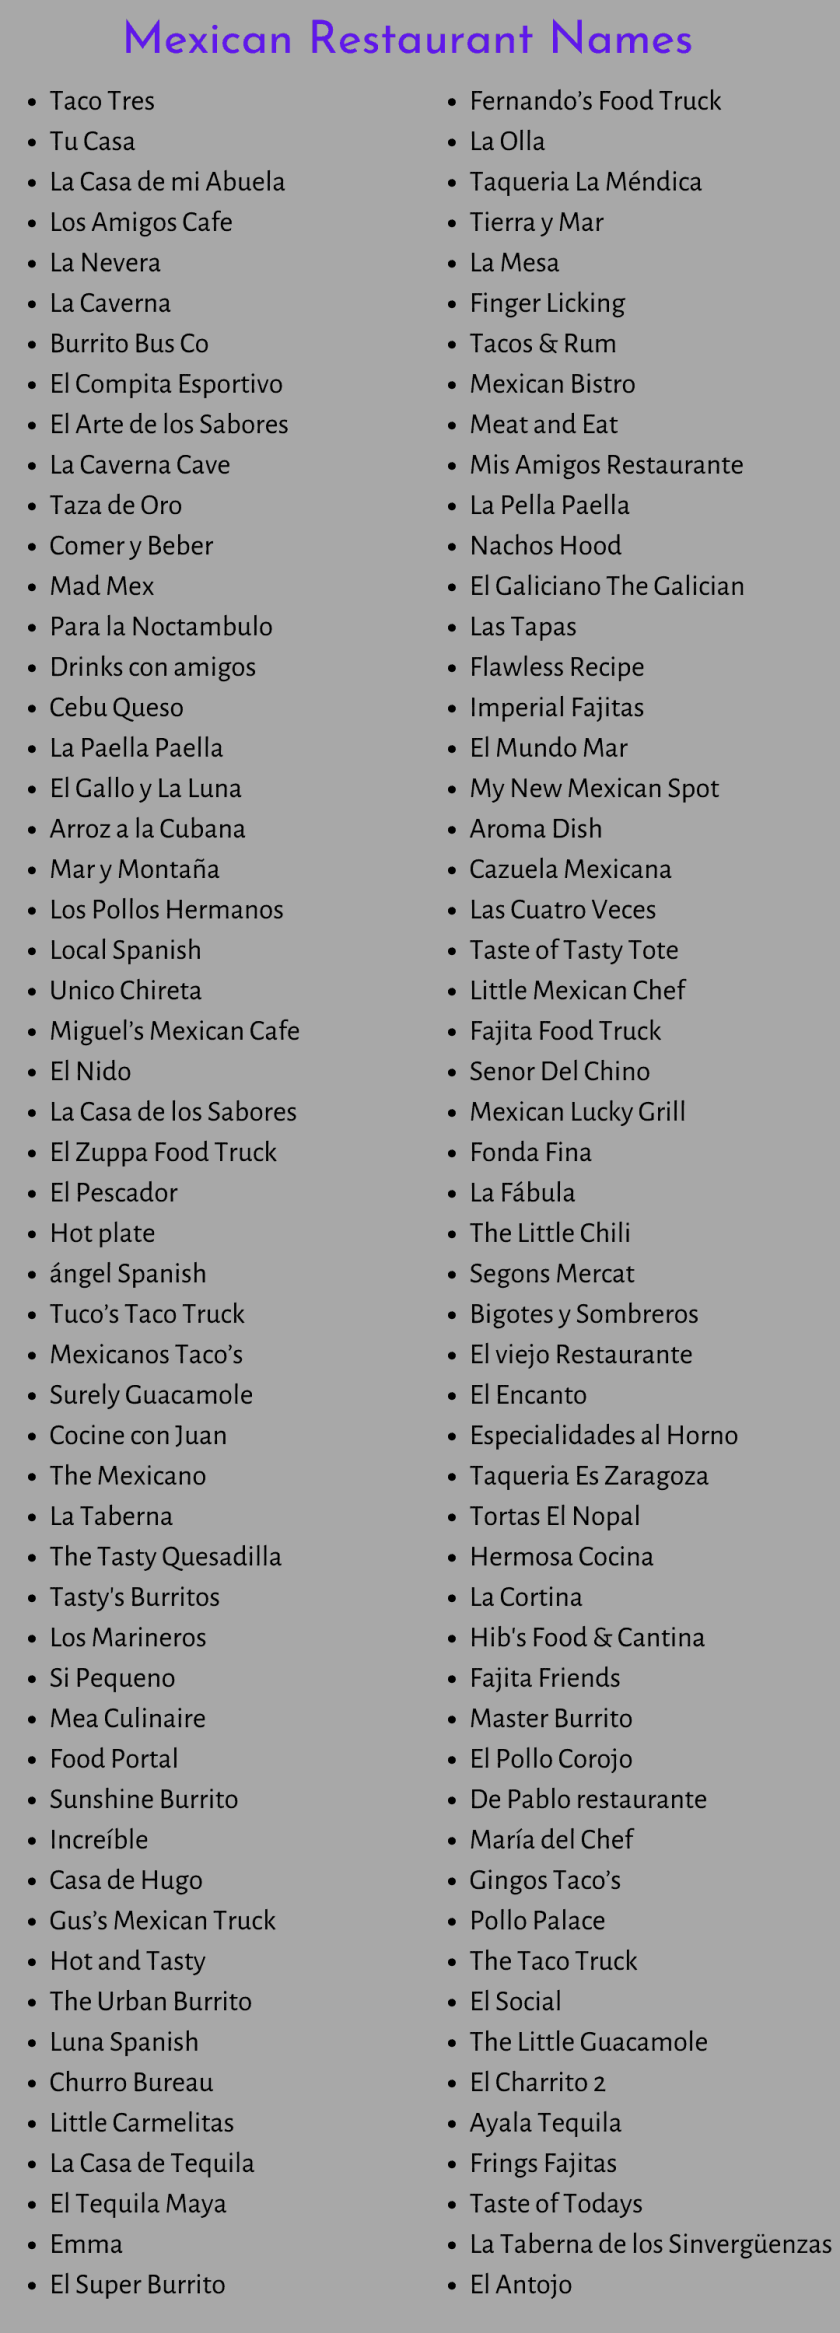 Mexican Restaurant Names